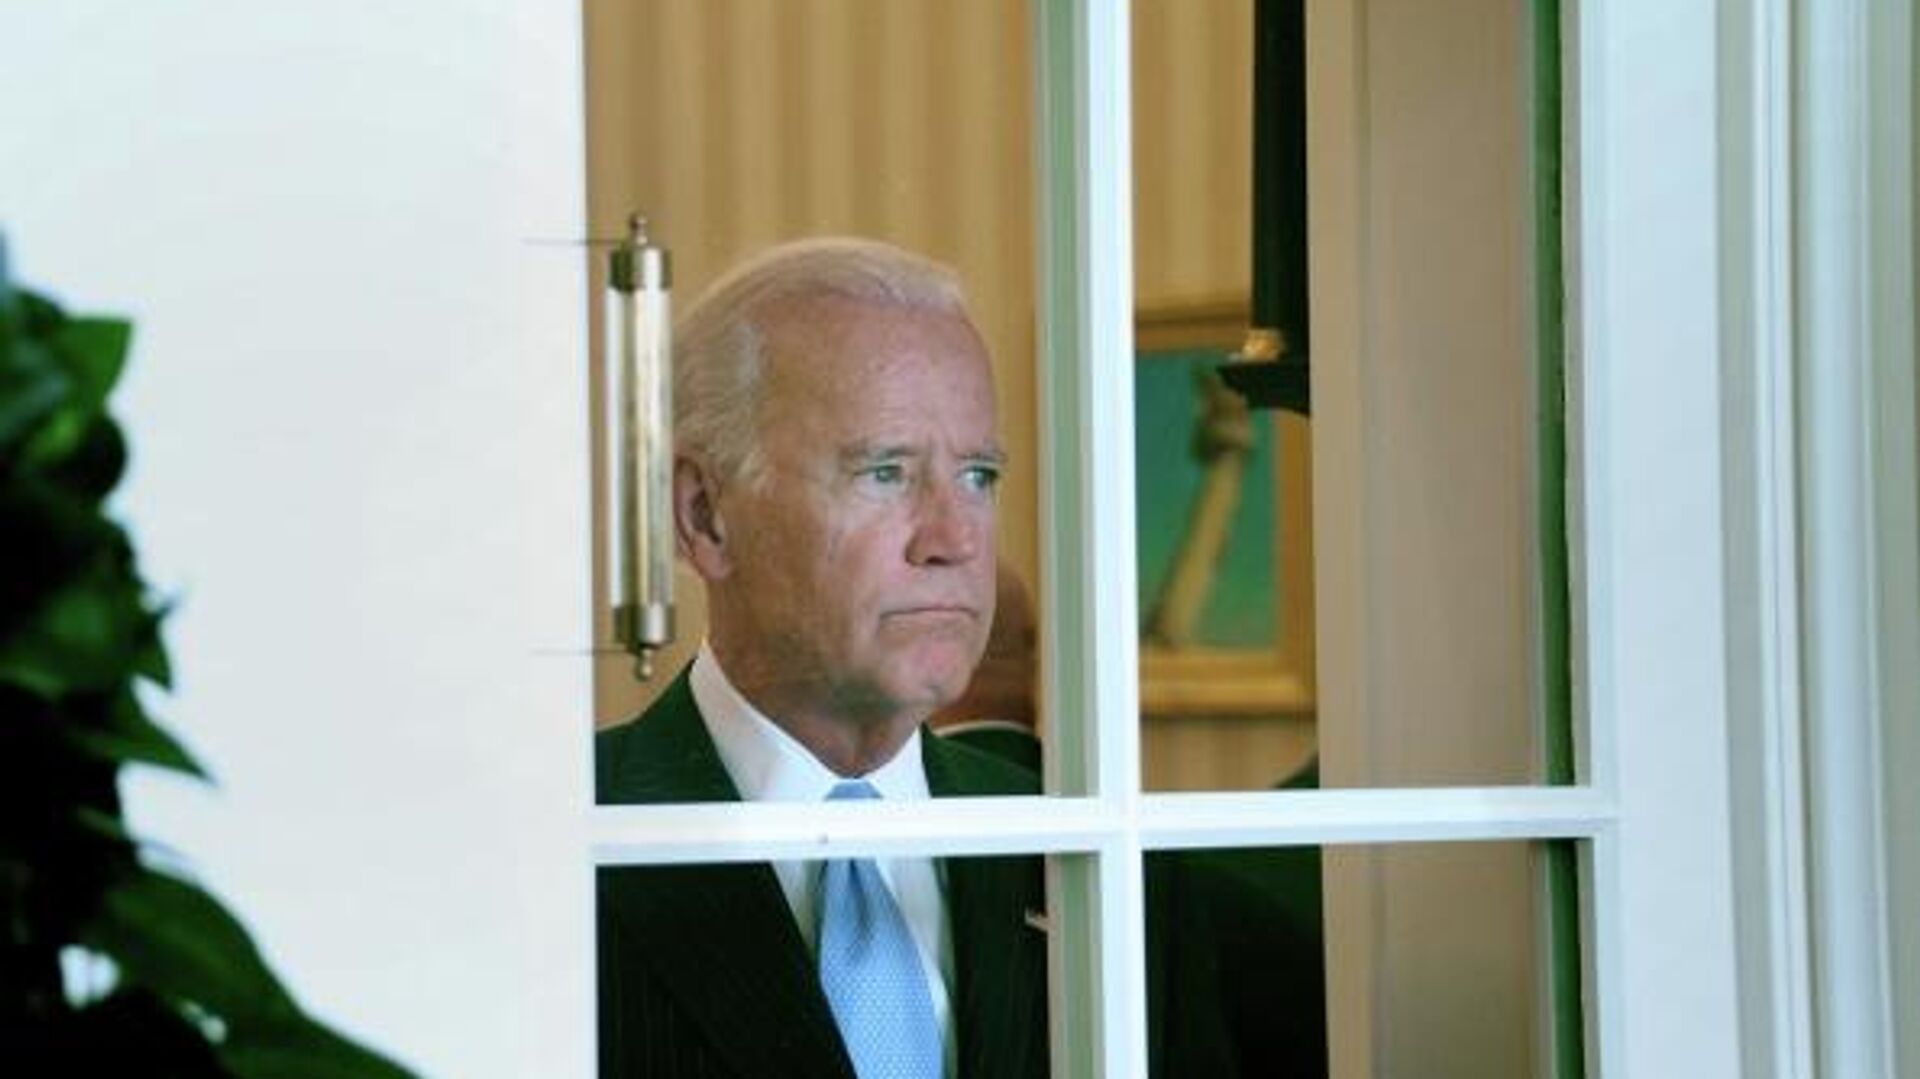 Sad Joe Biden photo from 2014. Source of endless internet memes. - Sputnik International, 1920, 16.10.2022